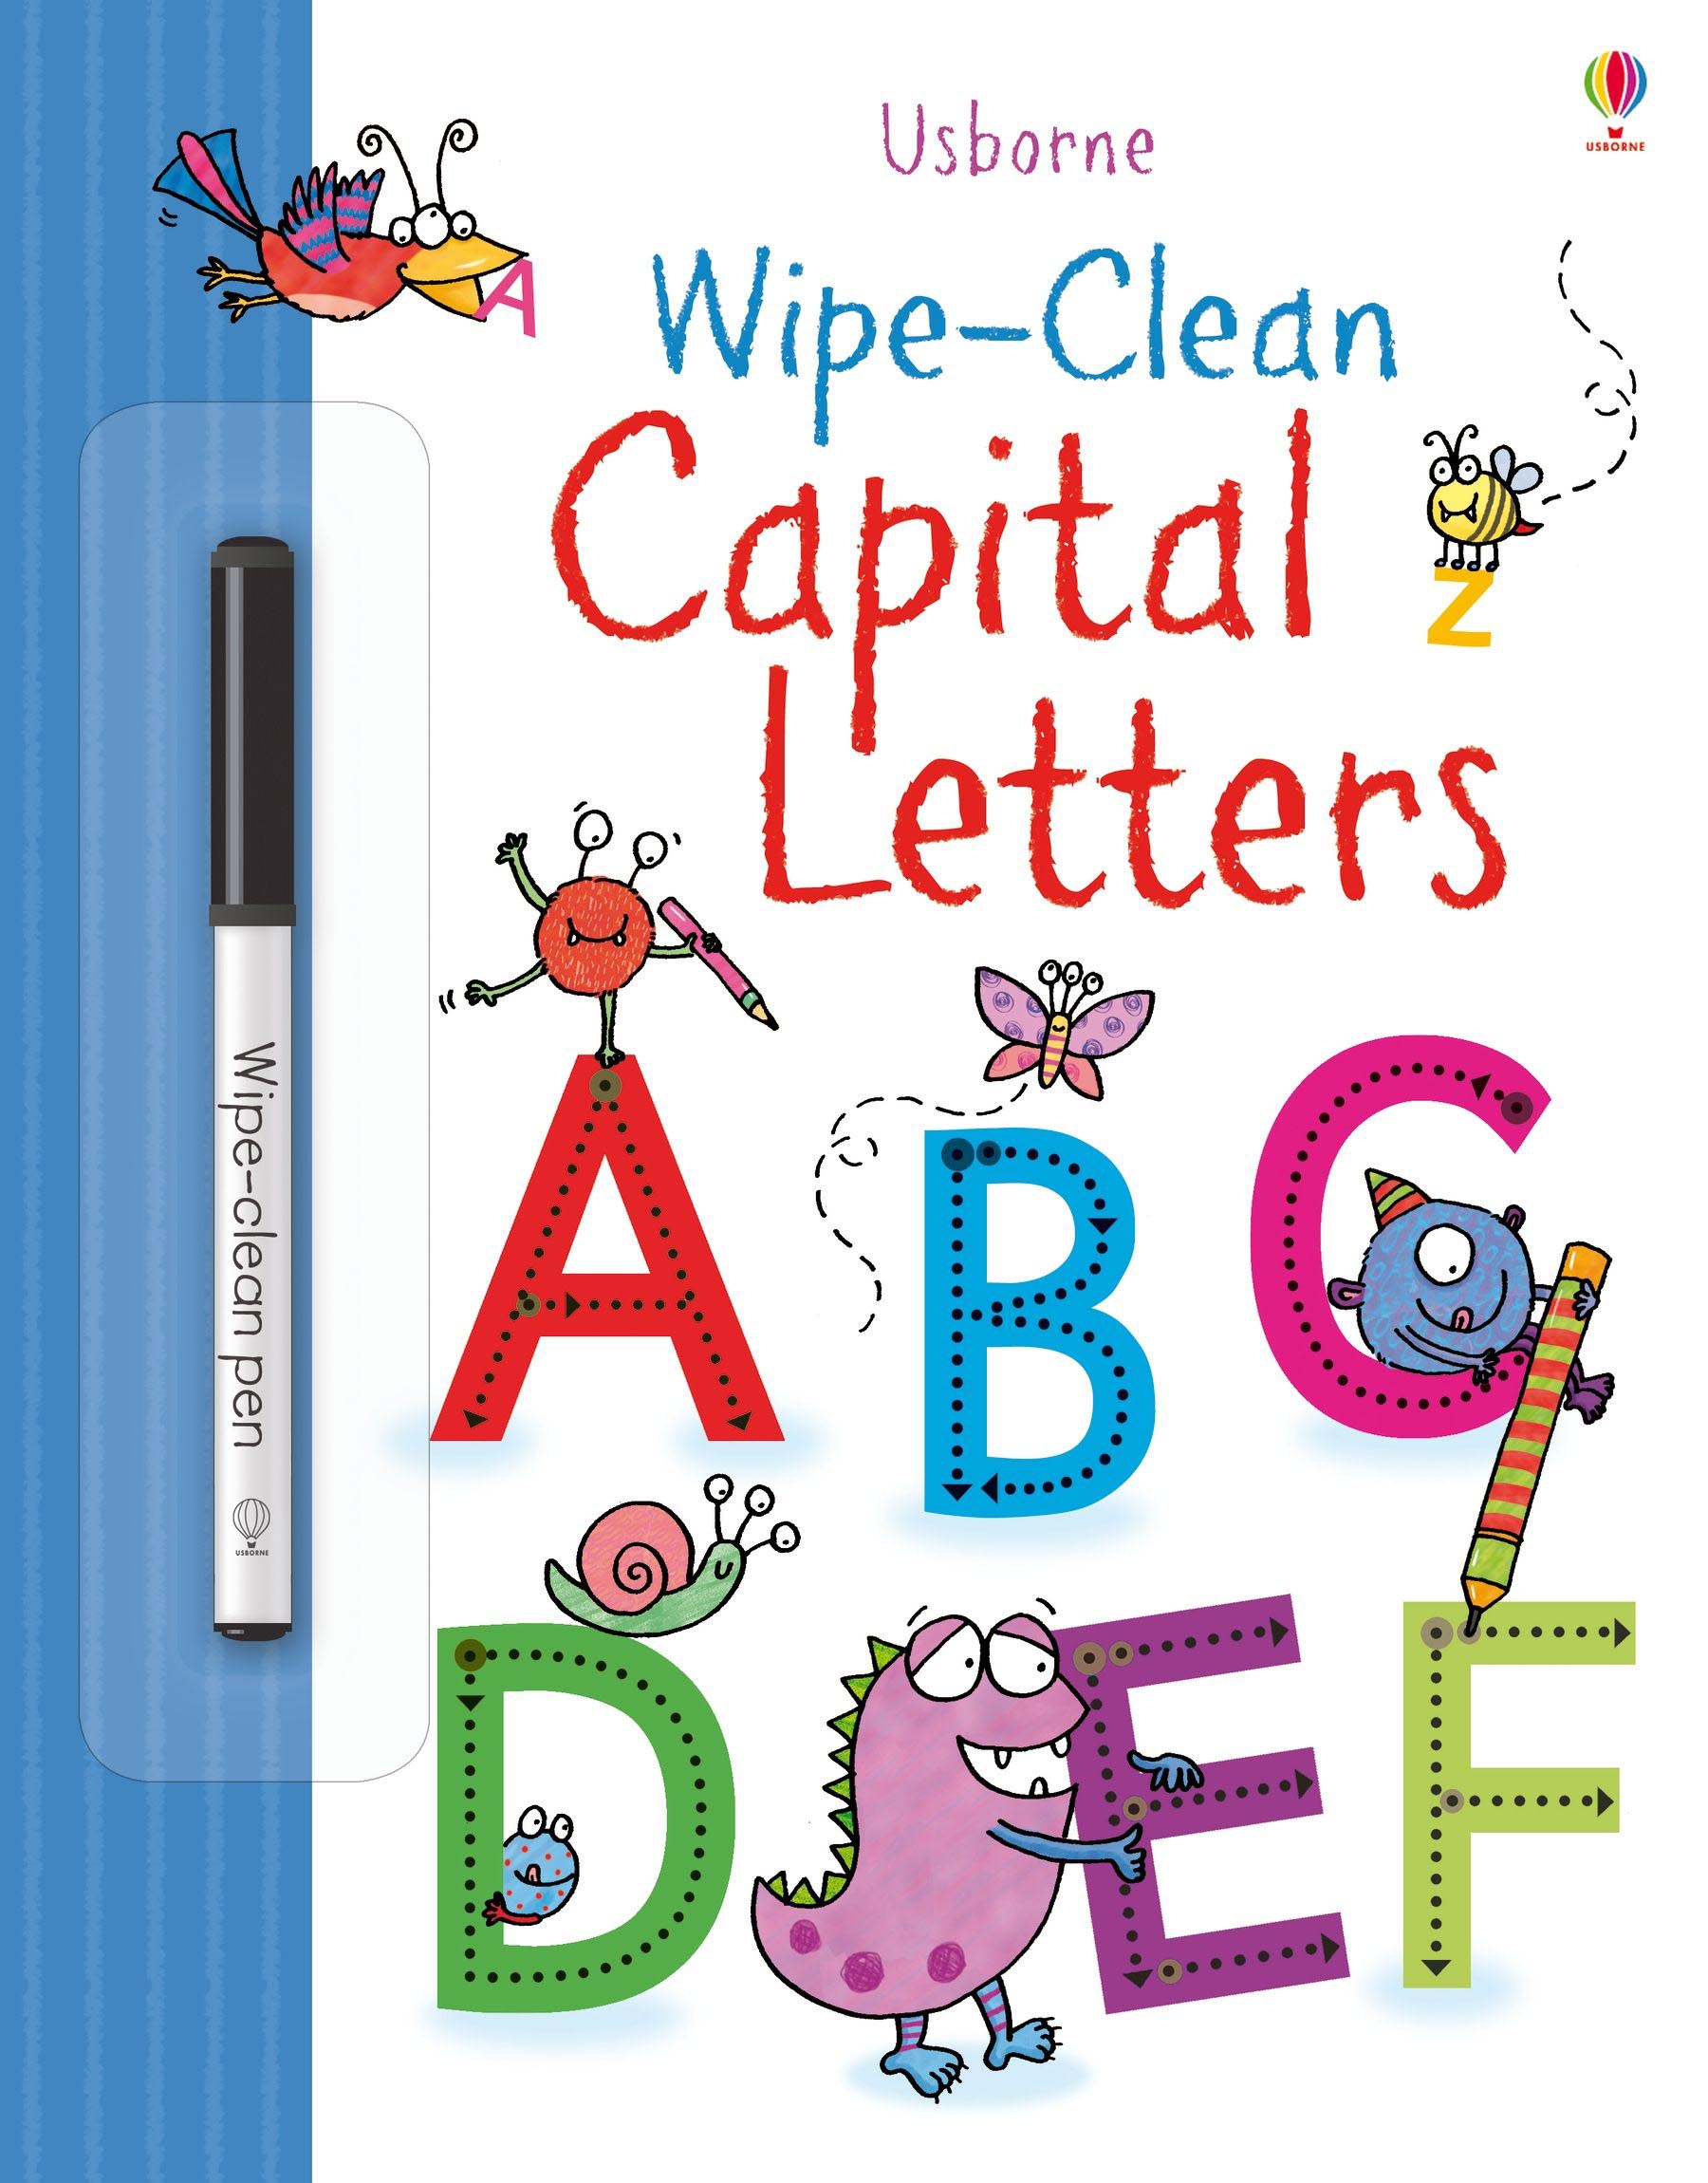 Usborne Wipe Clean Capital Letters